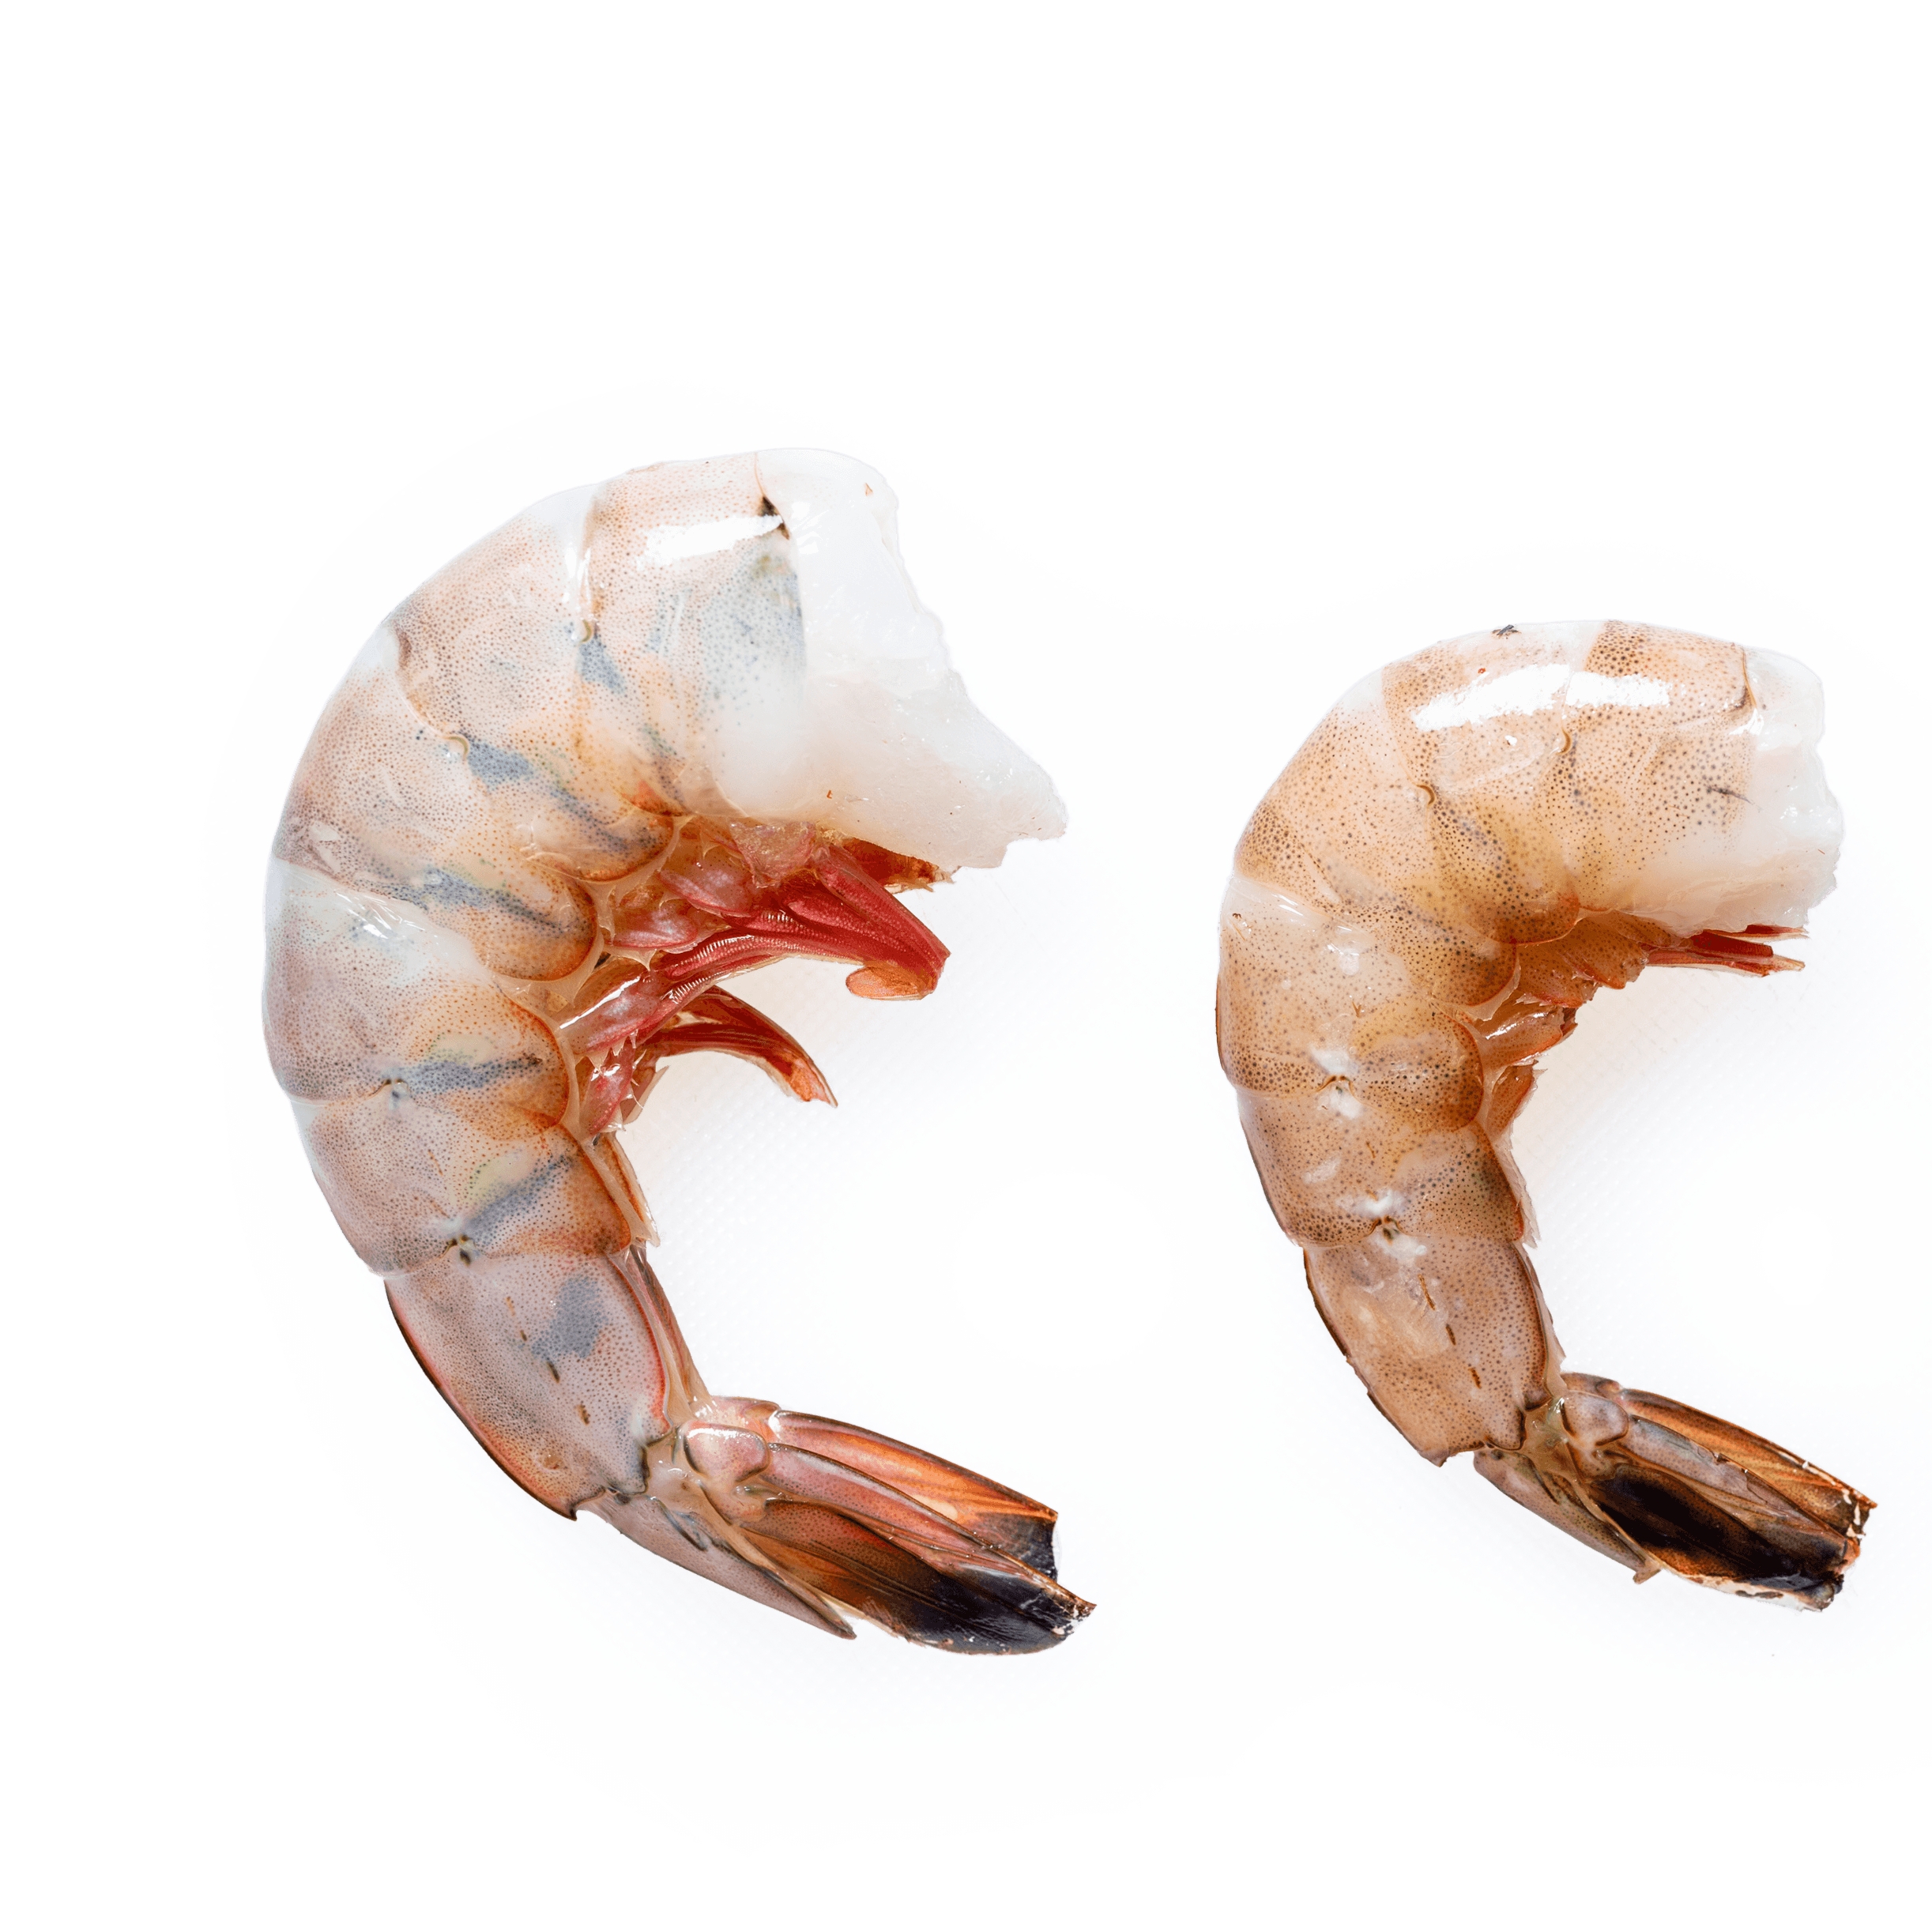 Crispy Fried Shrimp  America's Test Kitchen Recipe